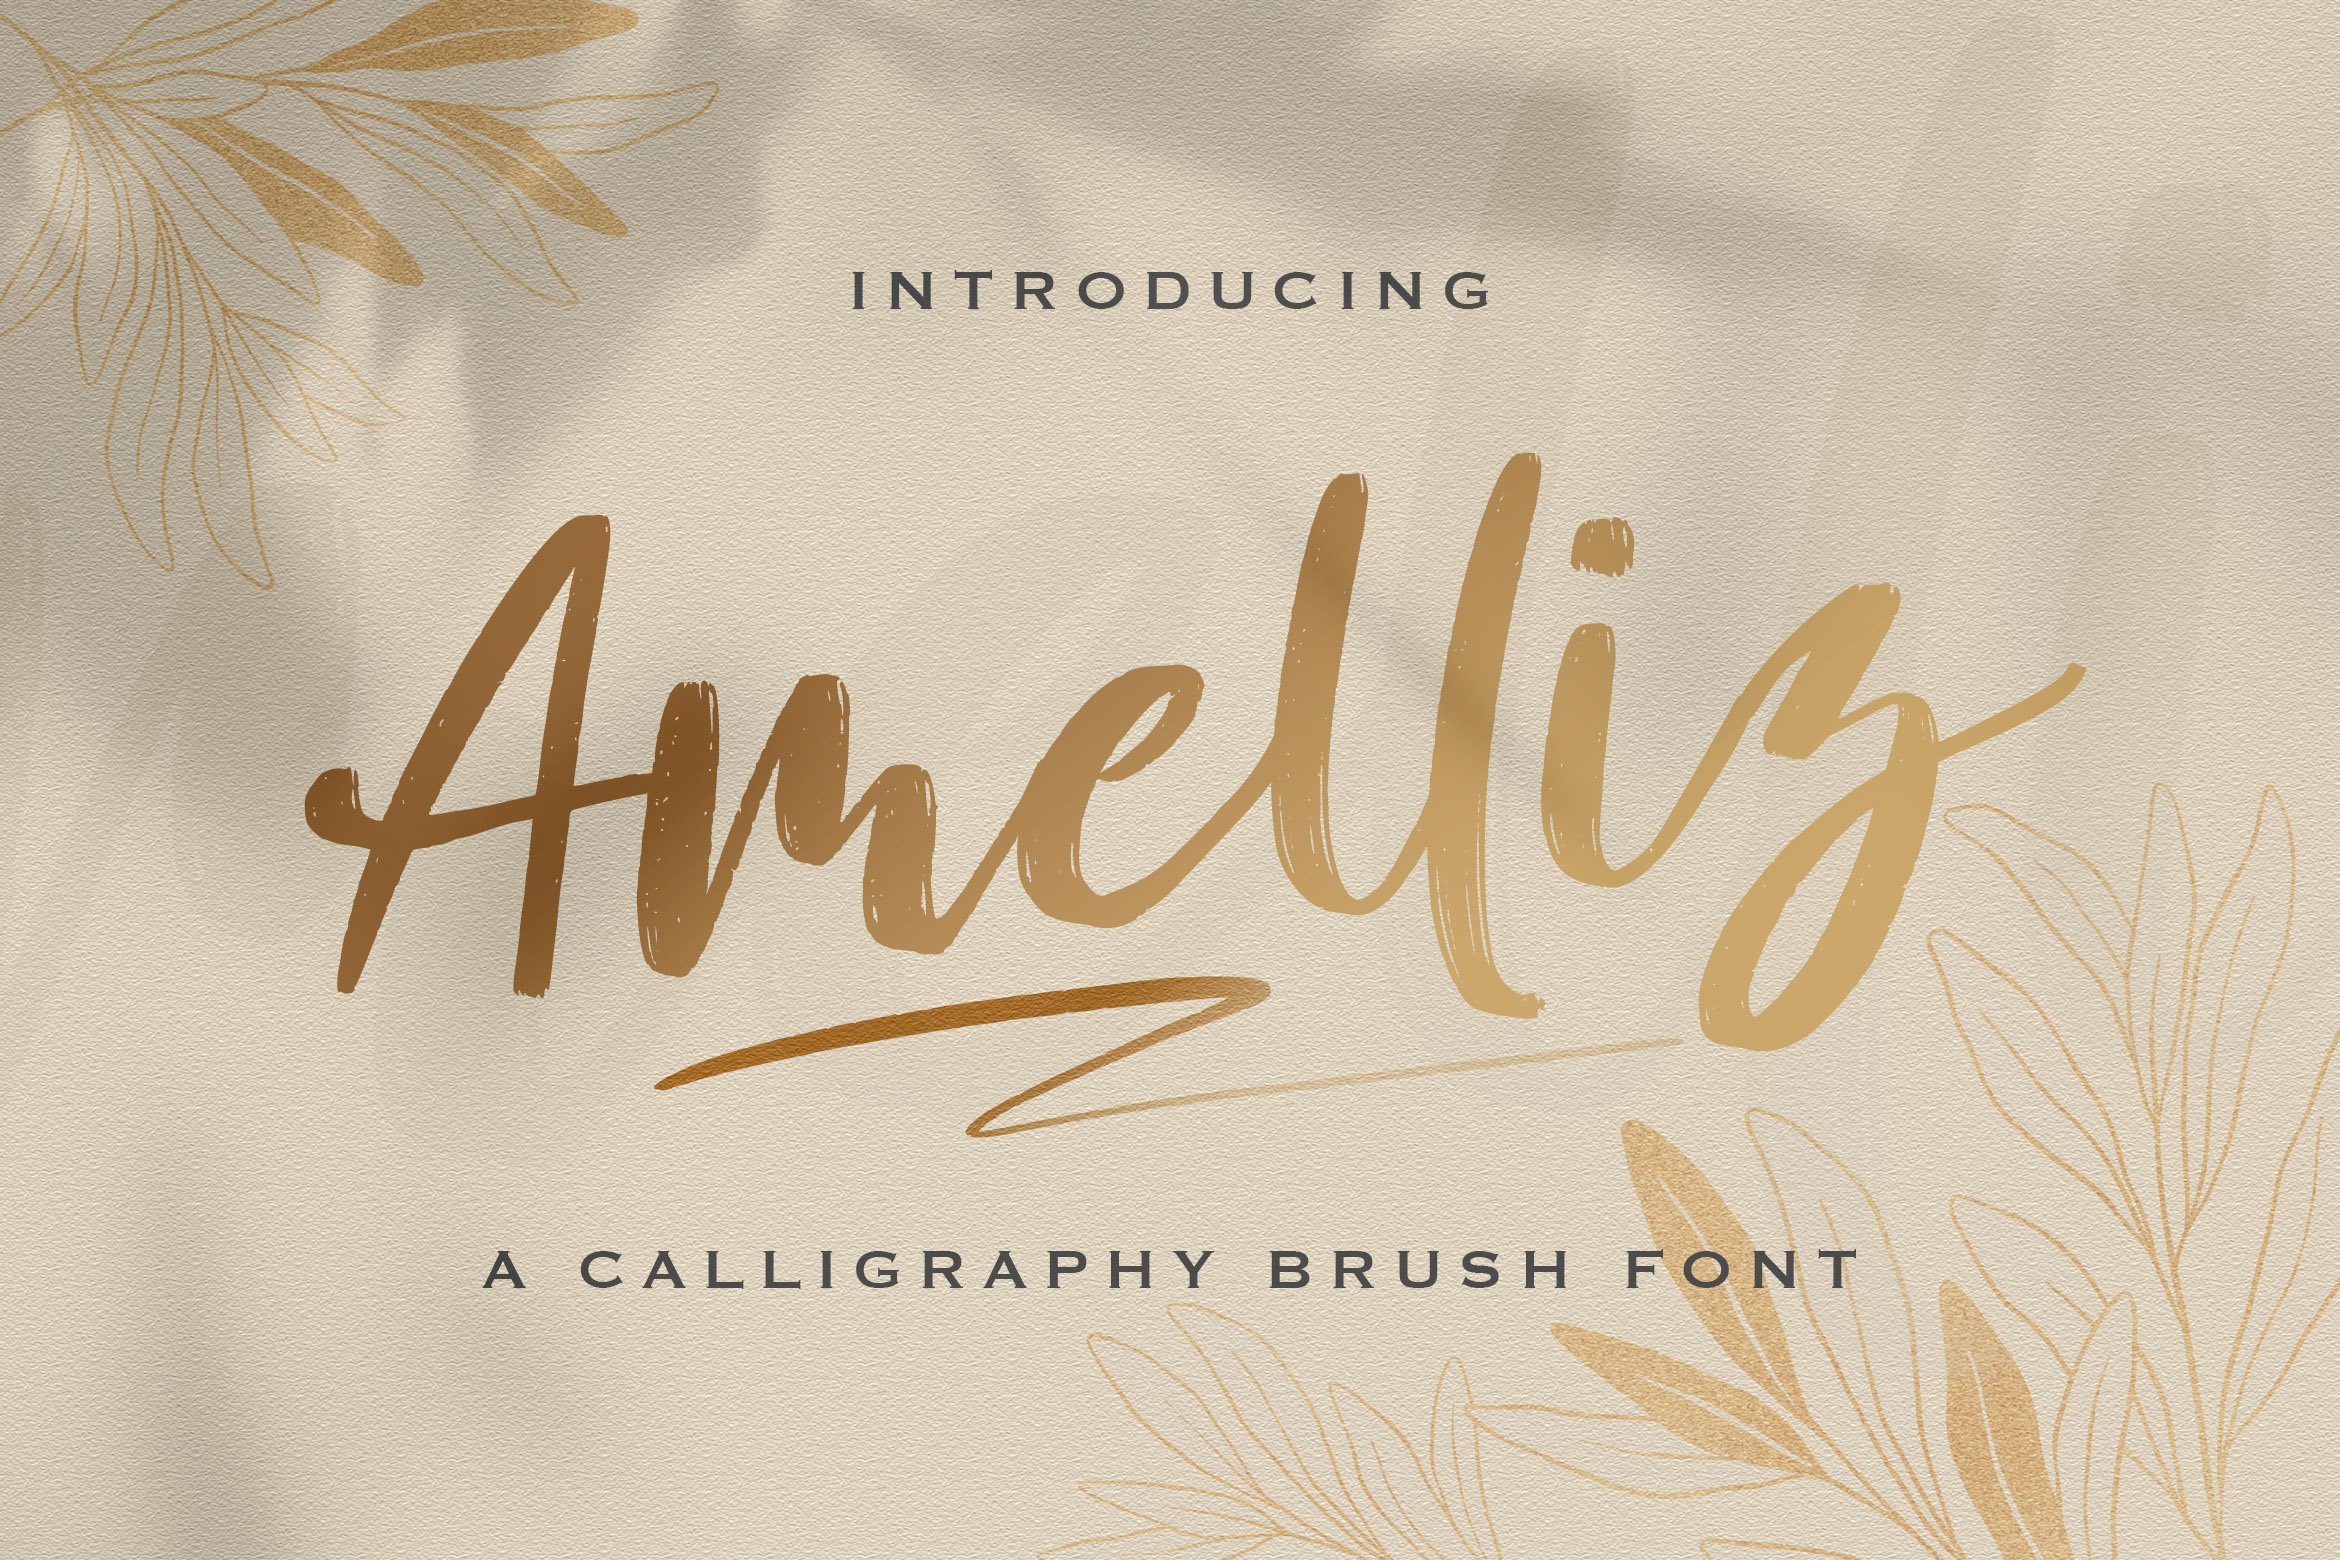 Amelliz - Calligraphy Brush Font cover image.